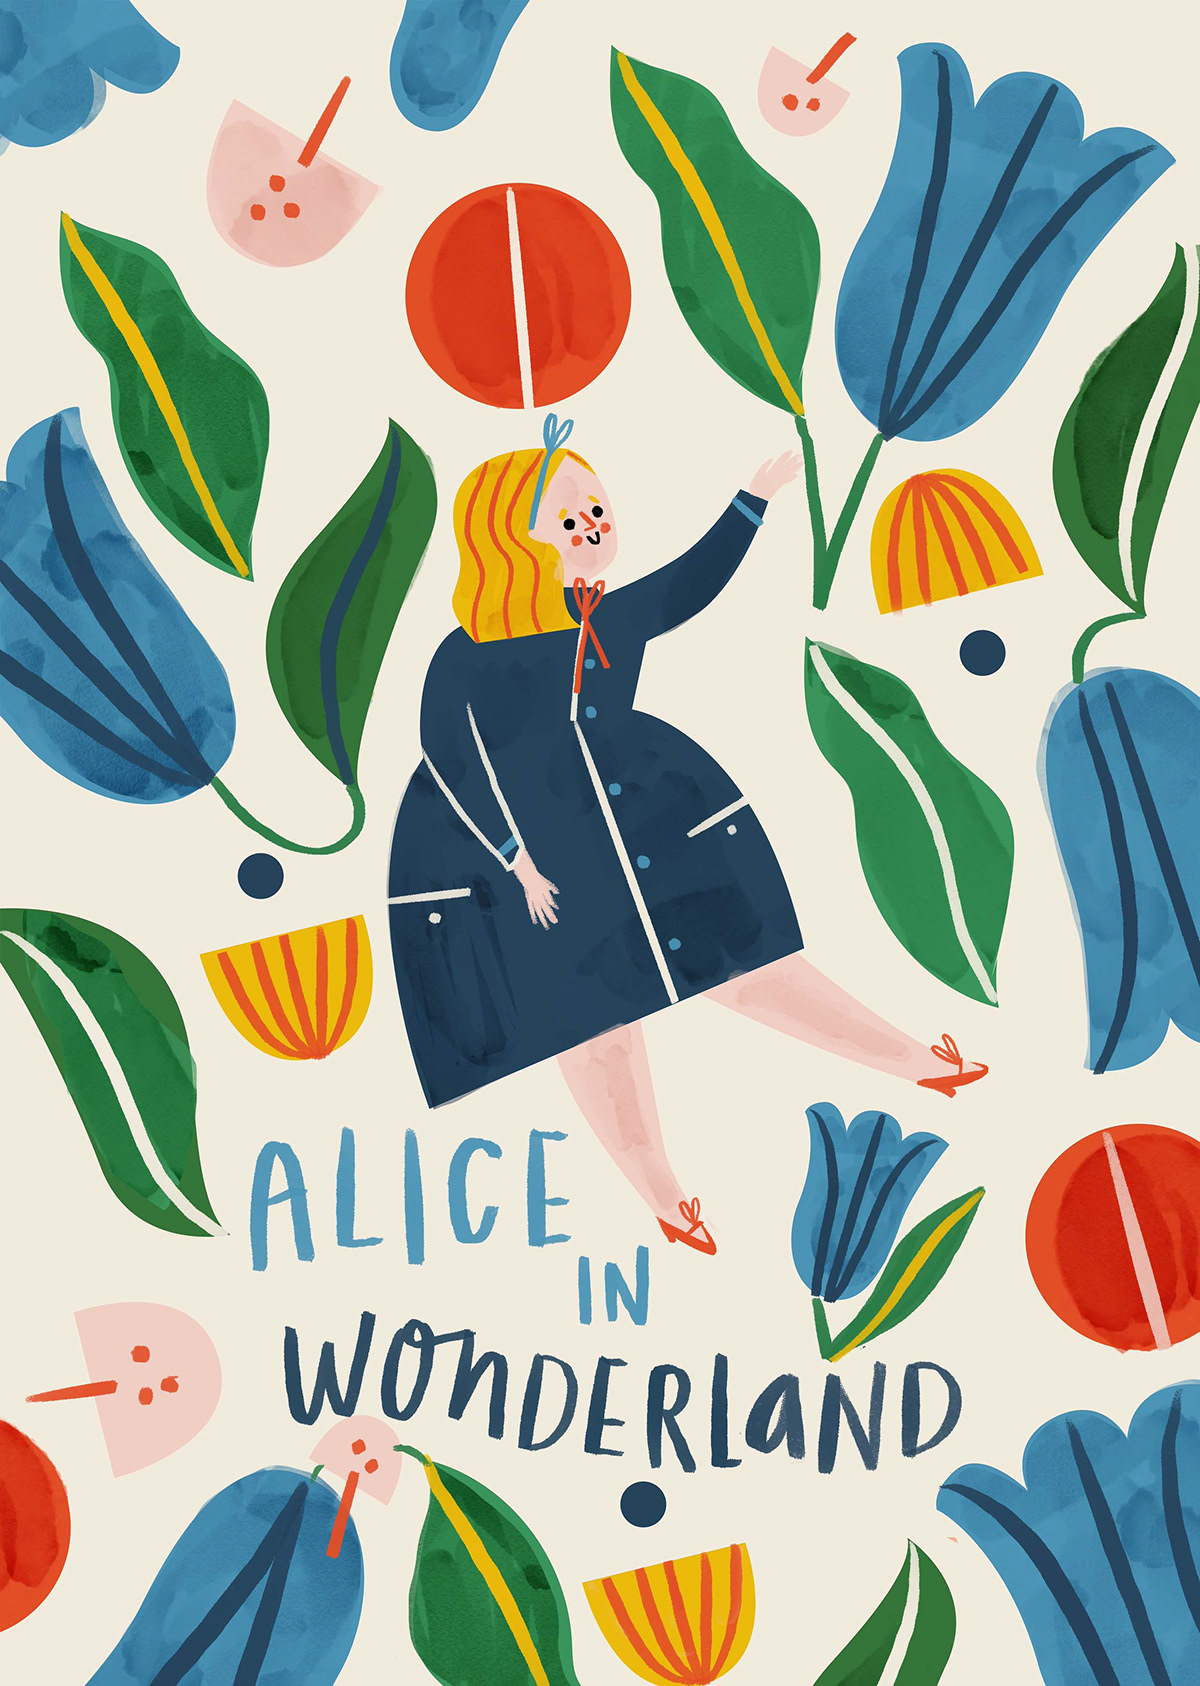 Alice in wonderland book cover
